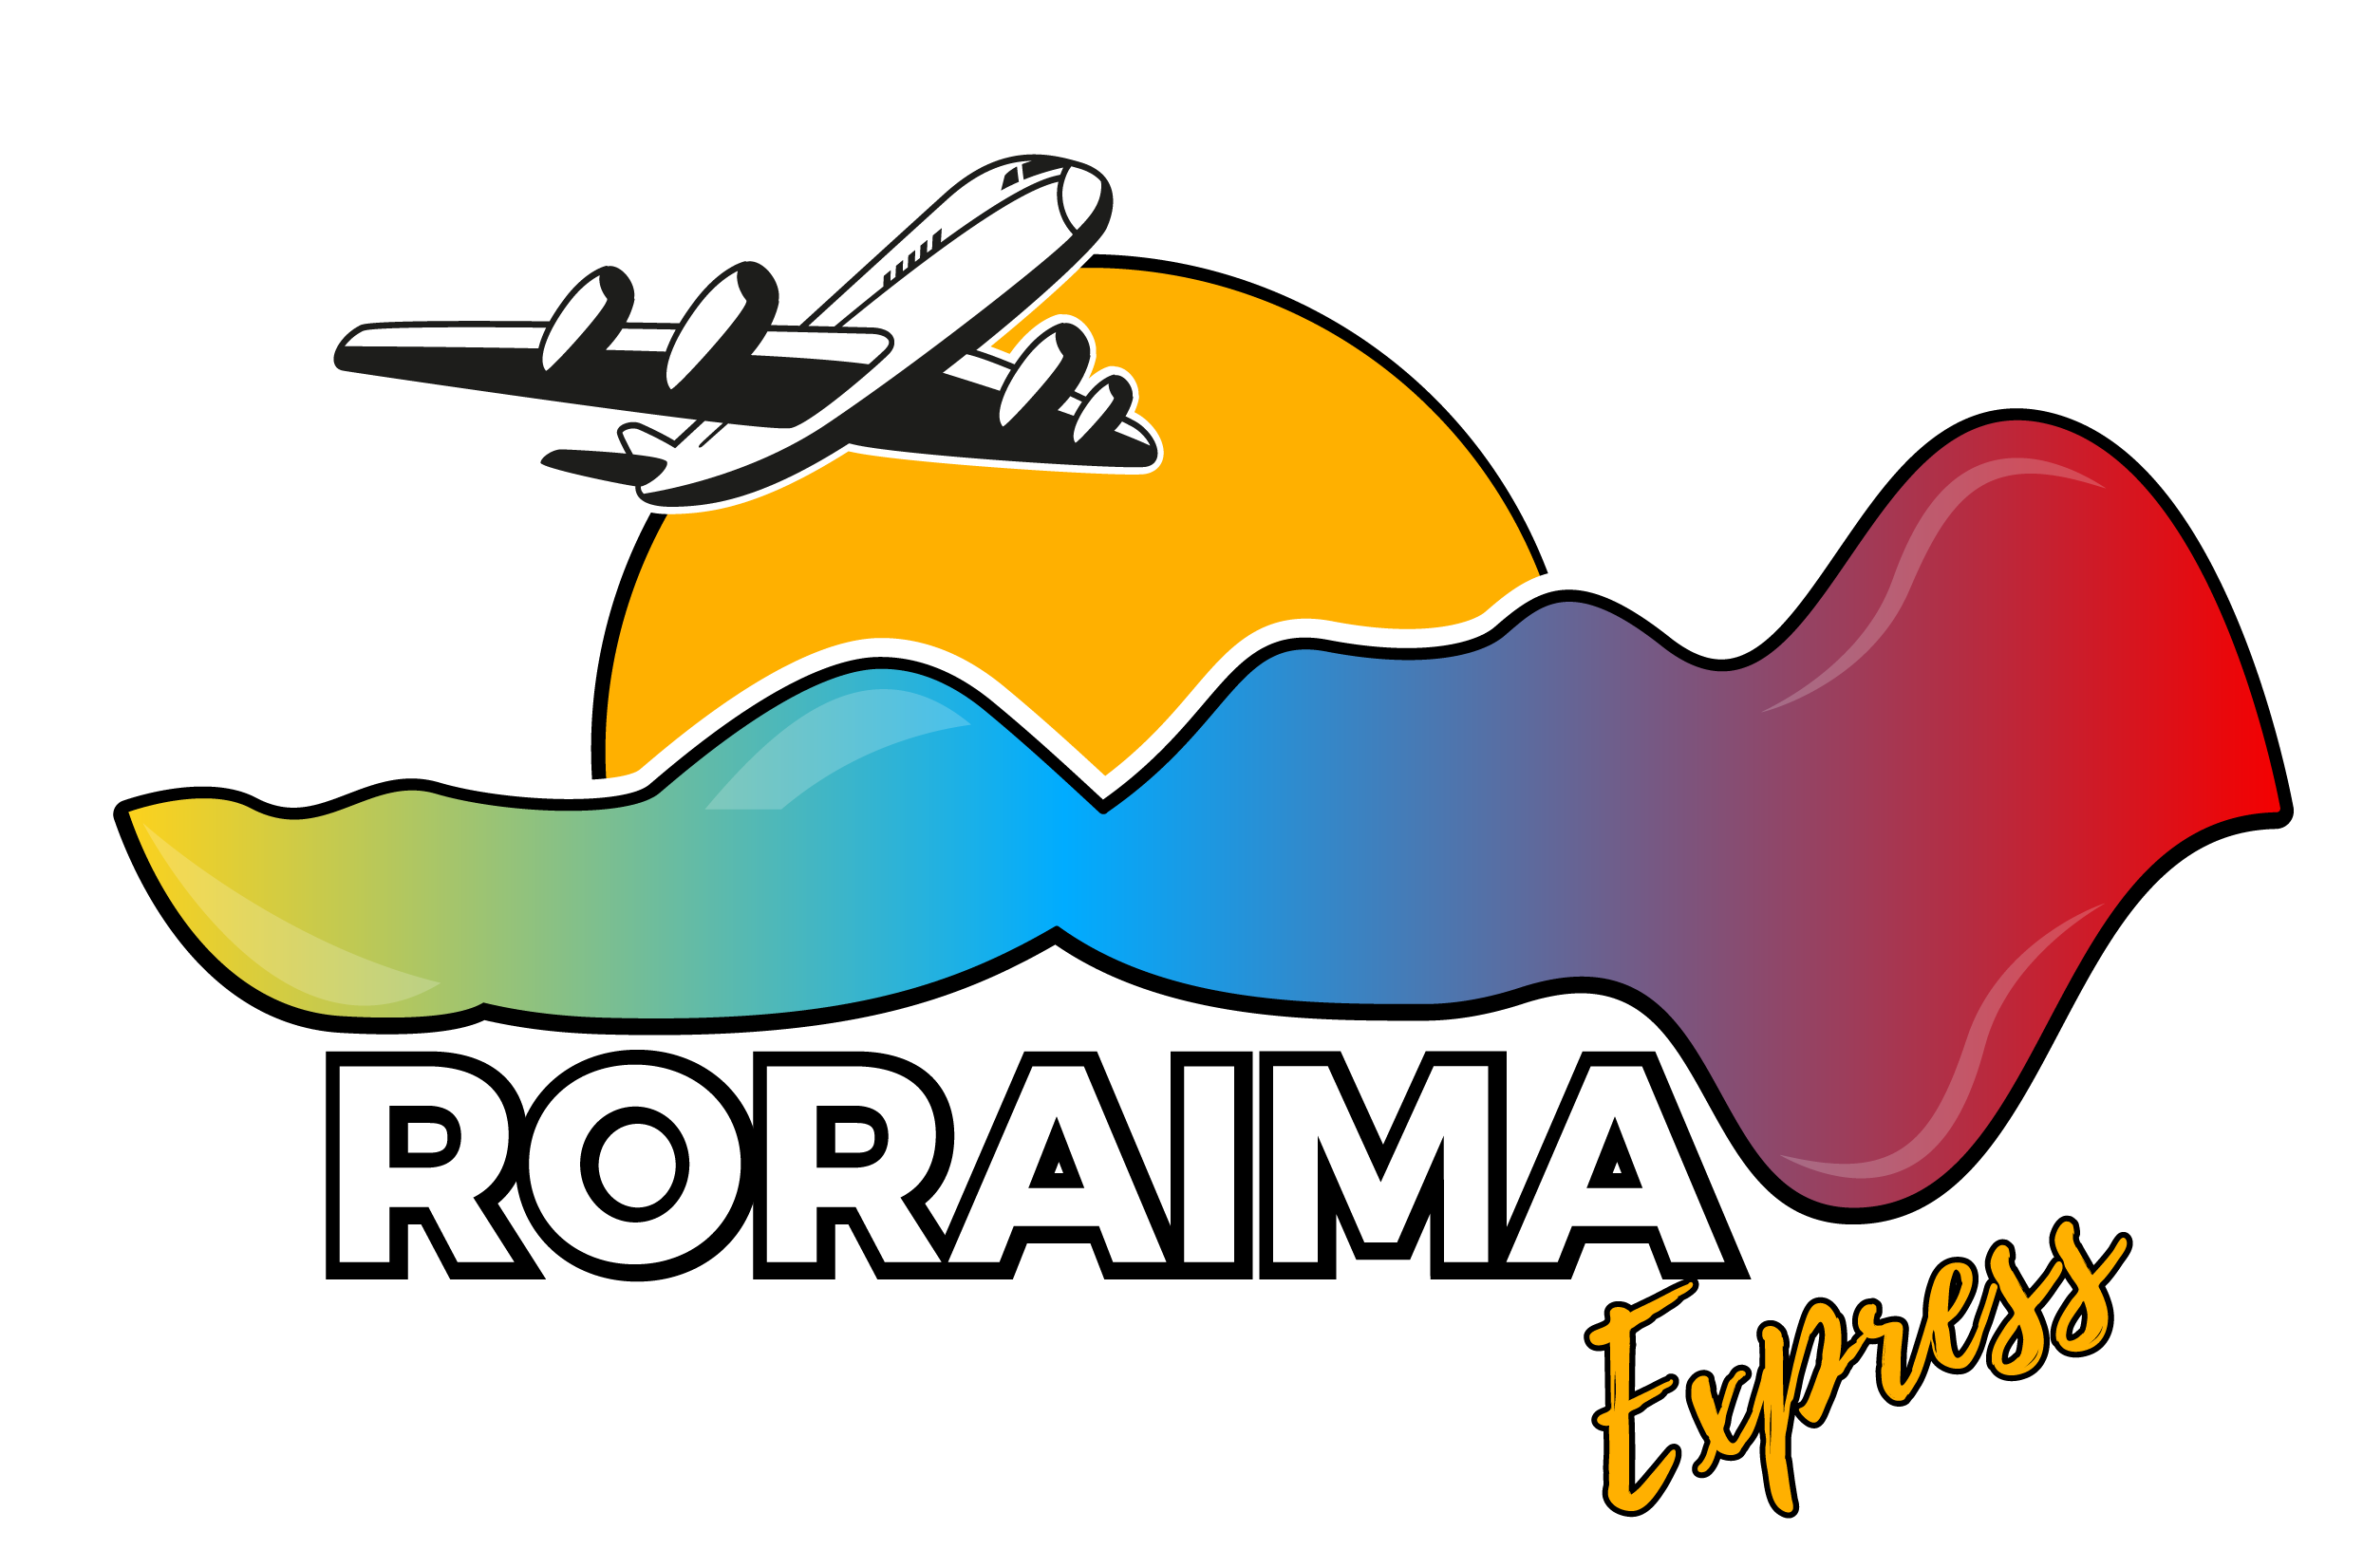 Roraima Express